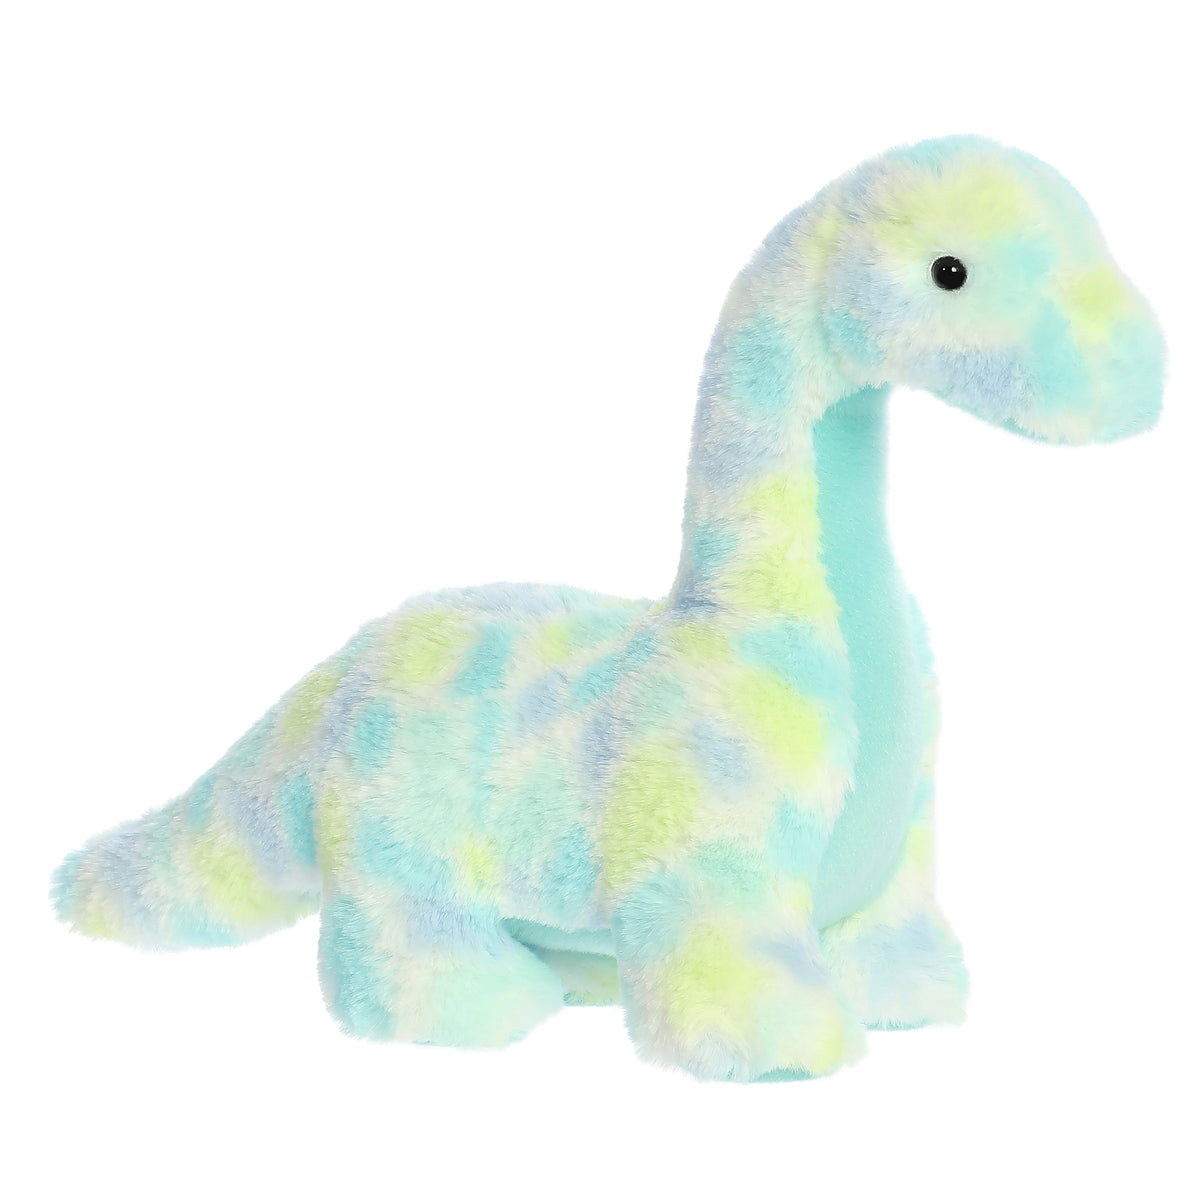 A Brachiosaurus dino plush showcasing a light blue and green watercolor blend, an artistic dinosaur stuffed animal